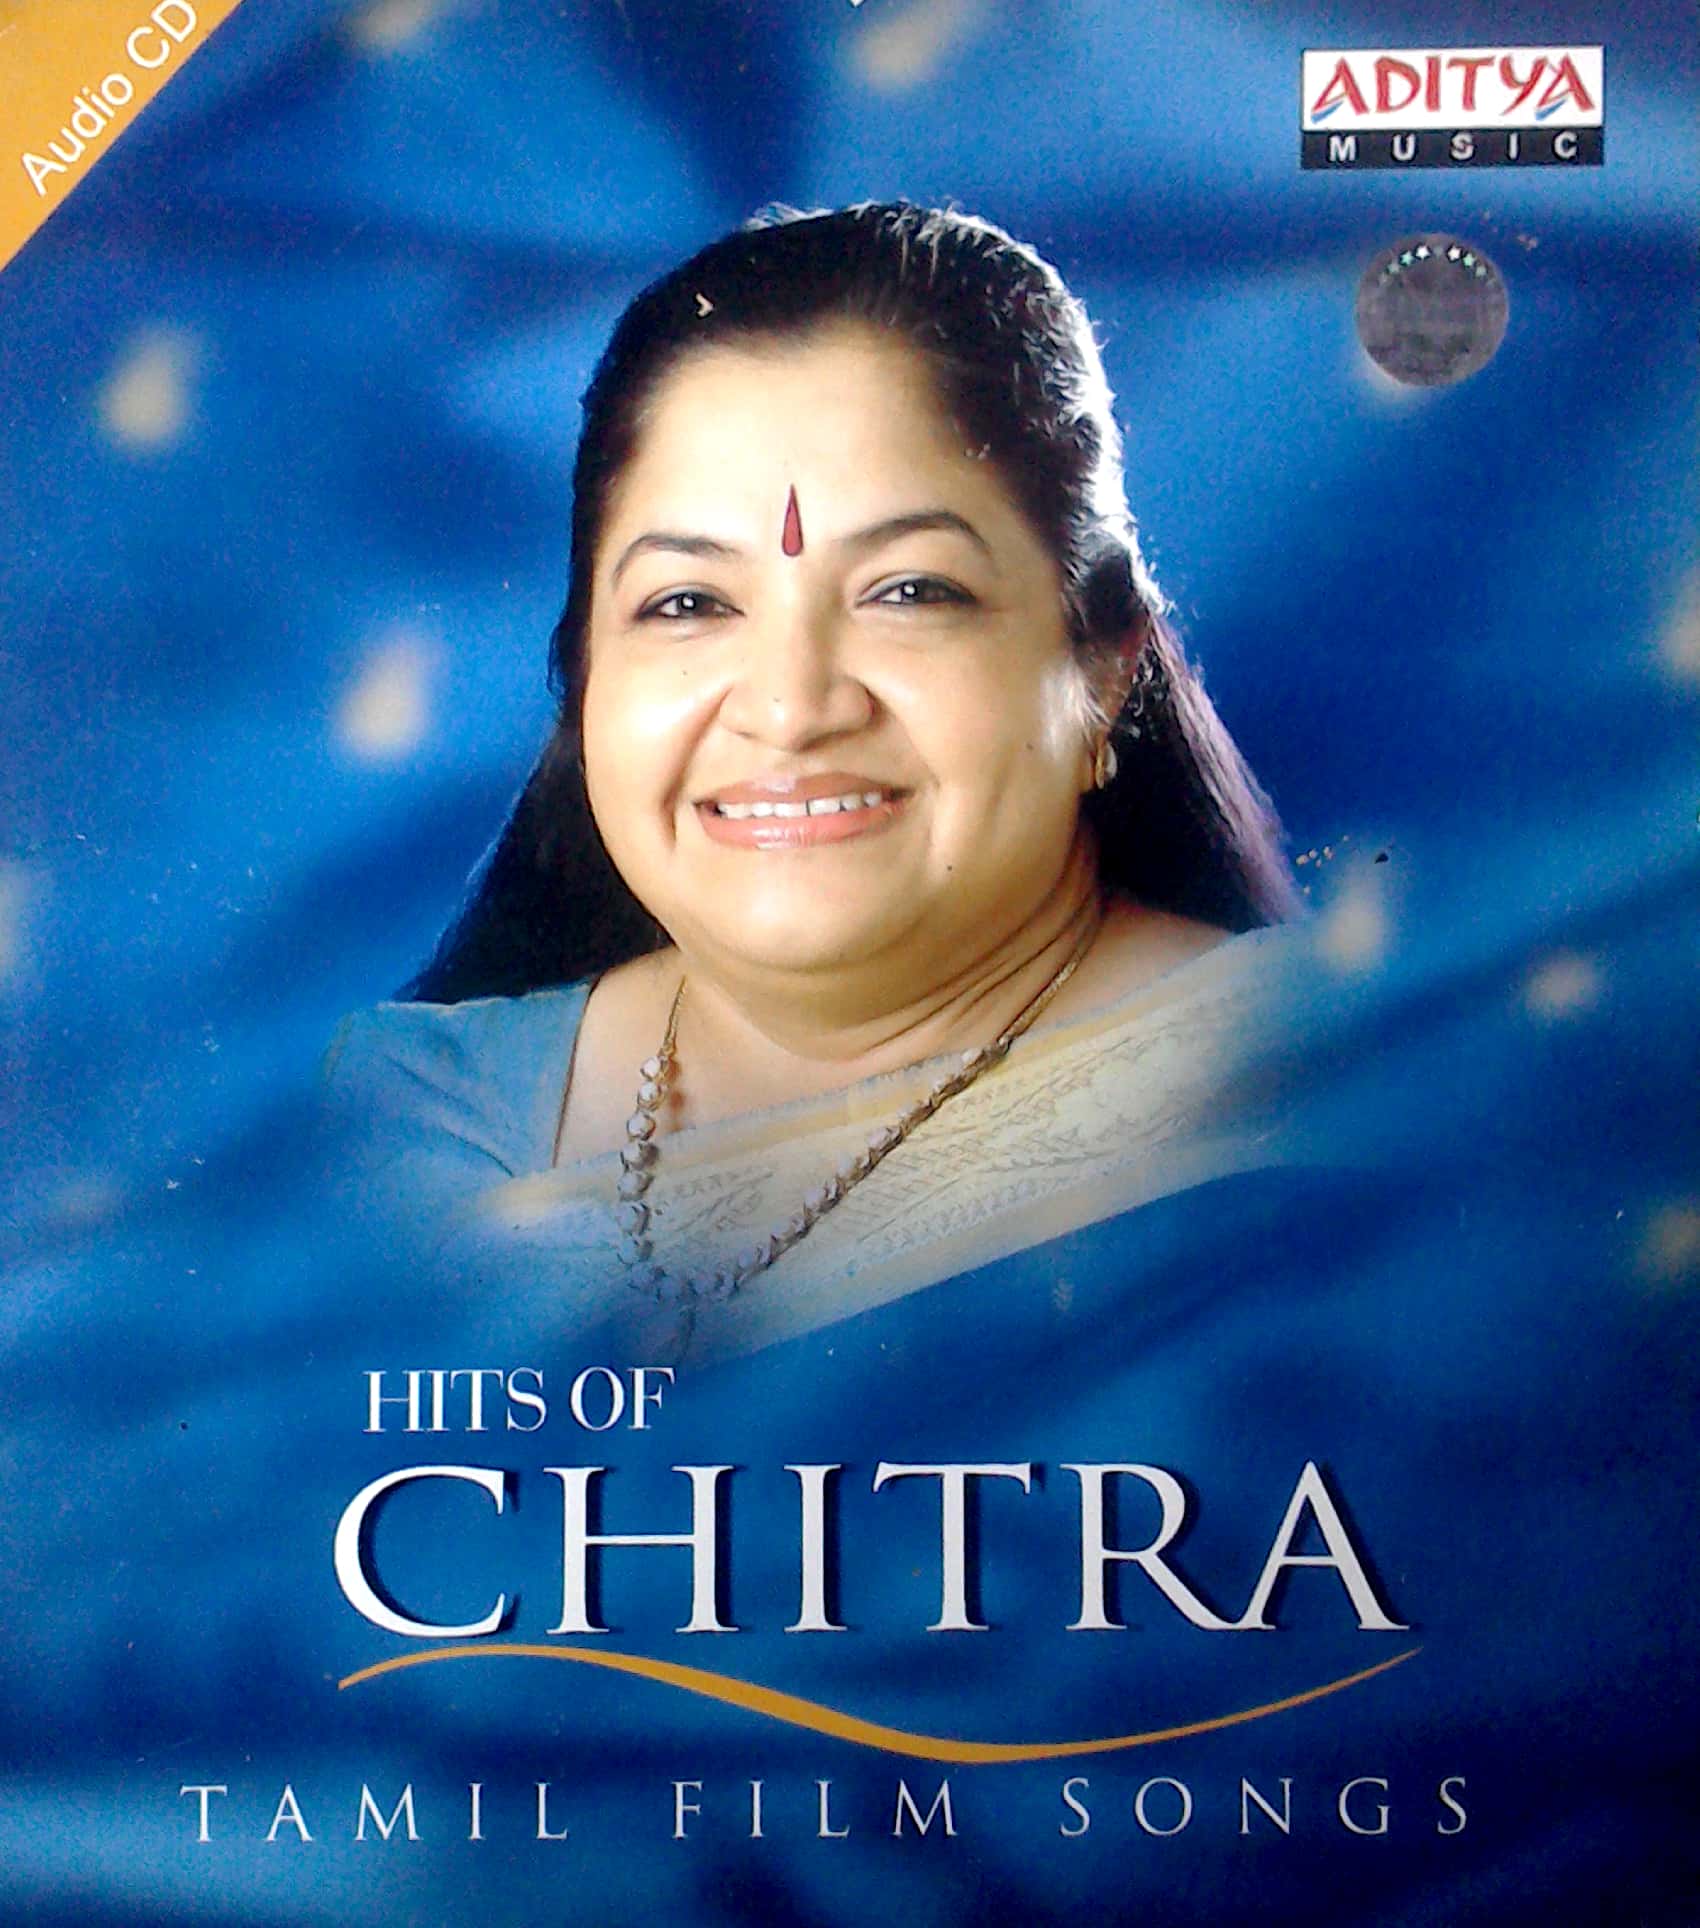 chitra tamil movie review